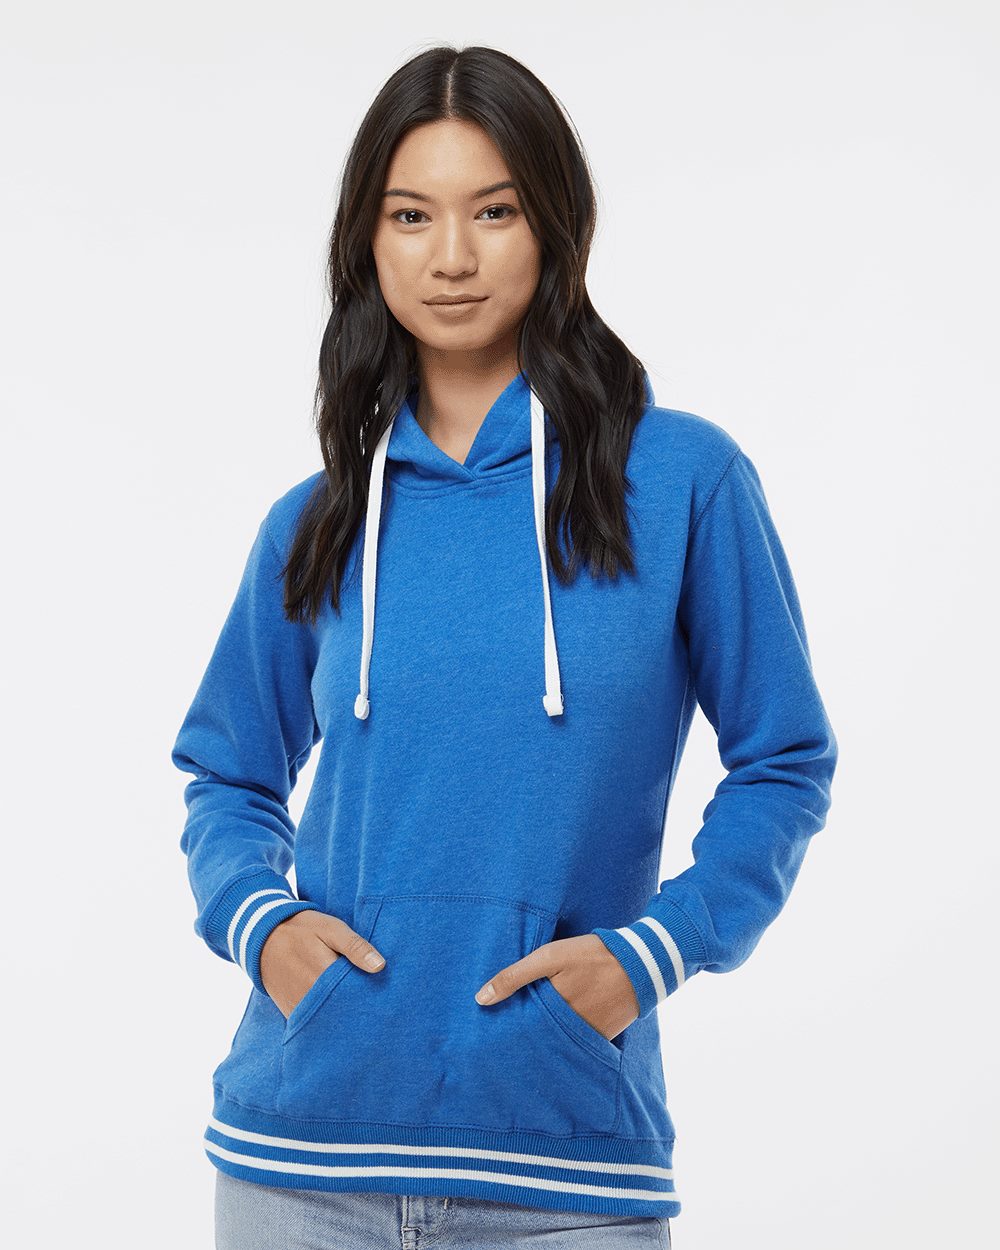 J. America 8651 - Women’s Relay Hooded Sweatshirt